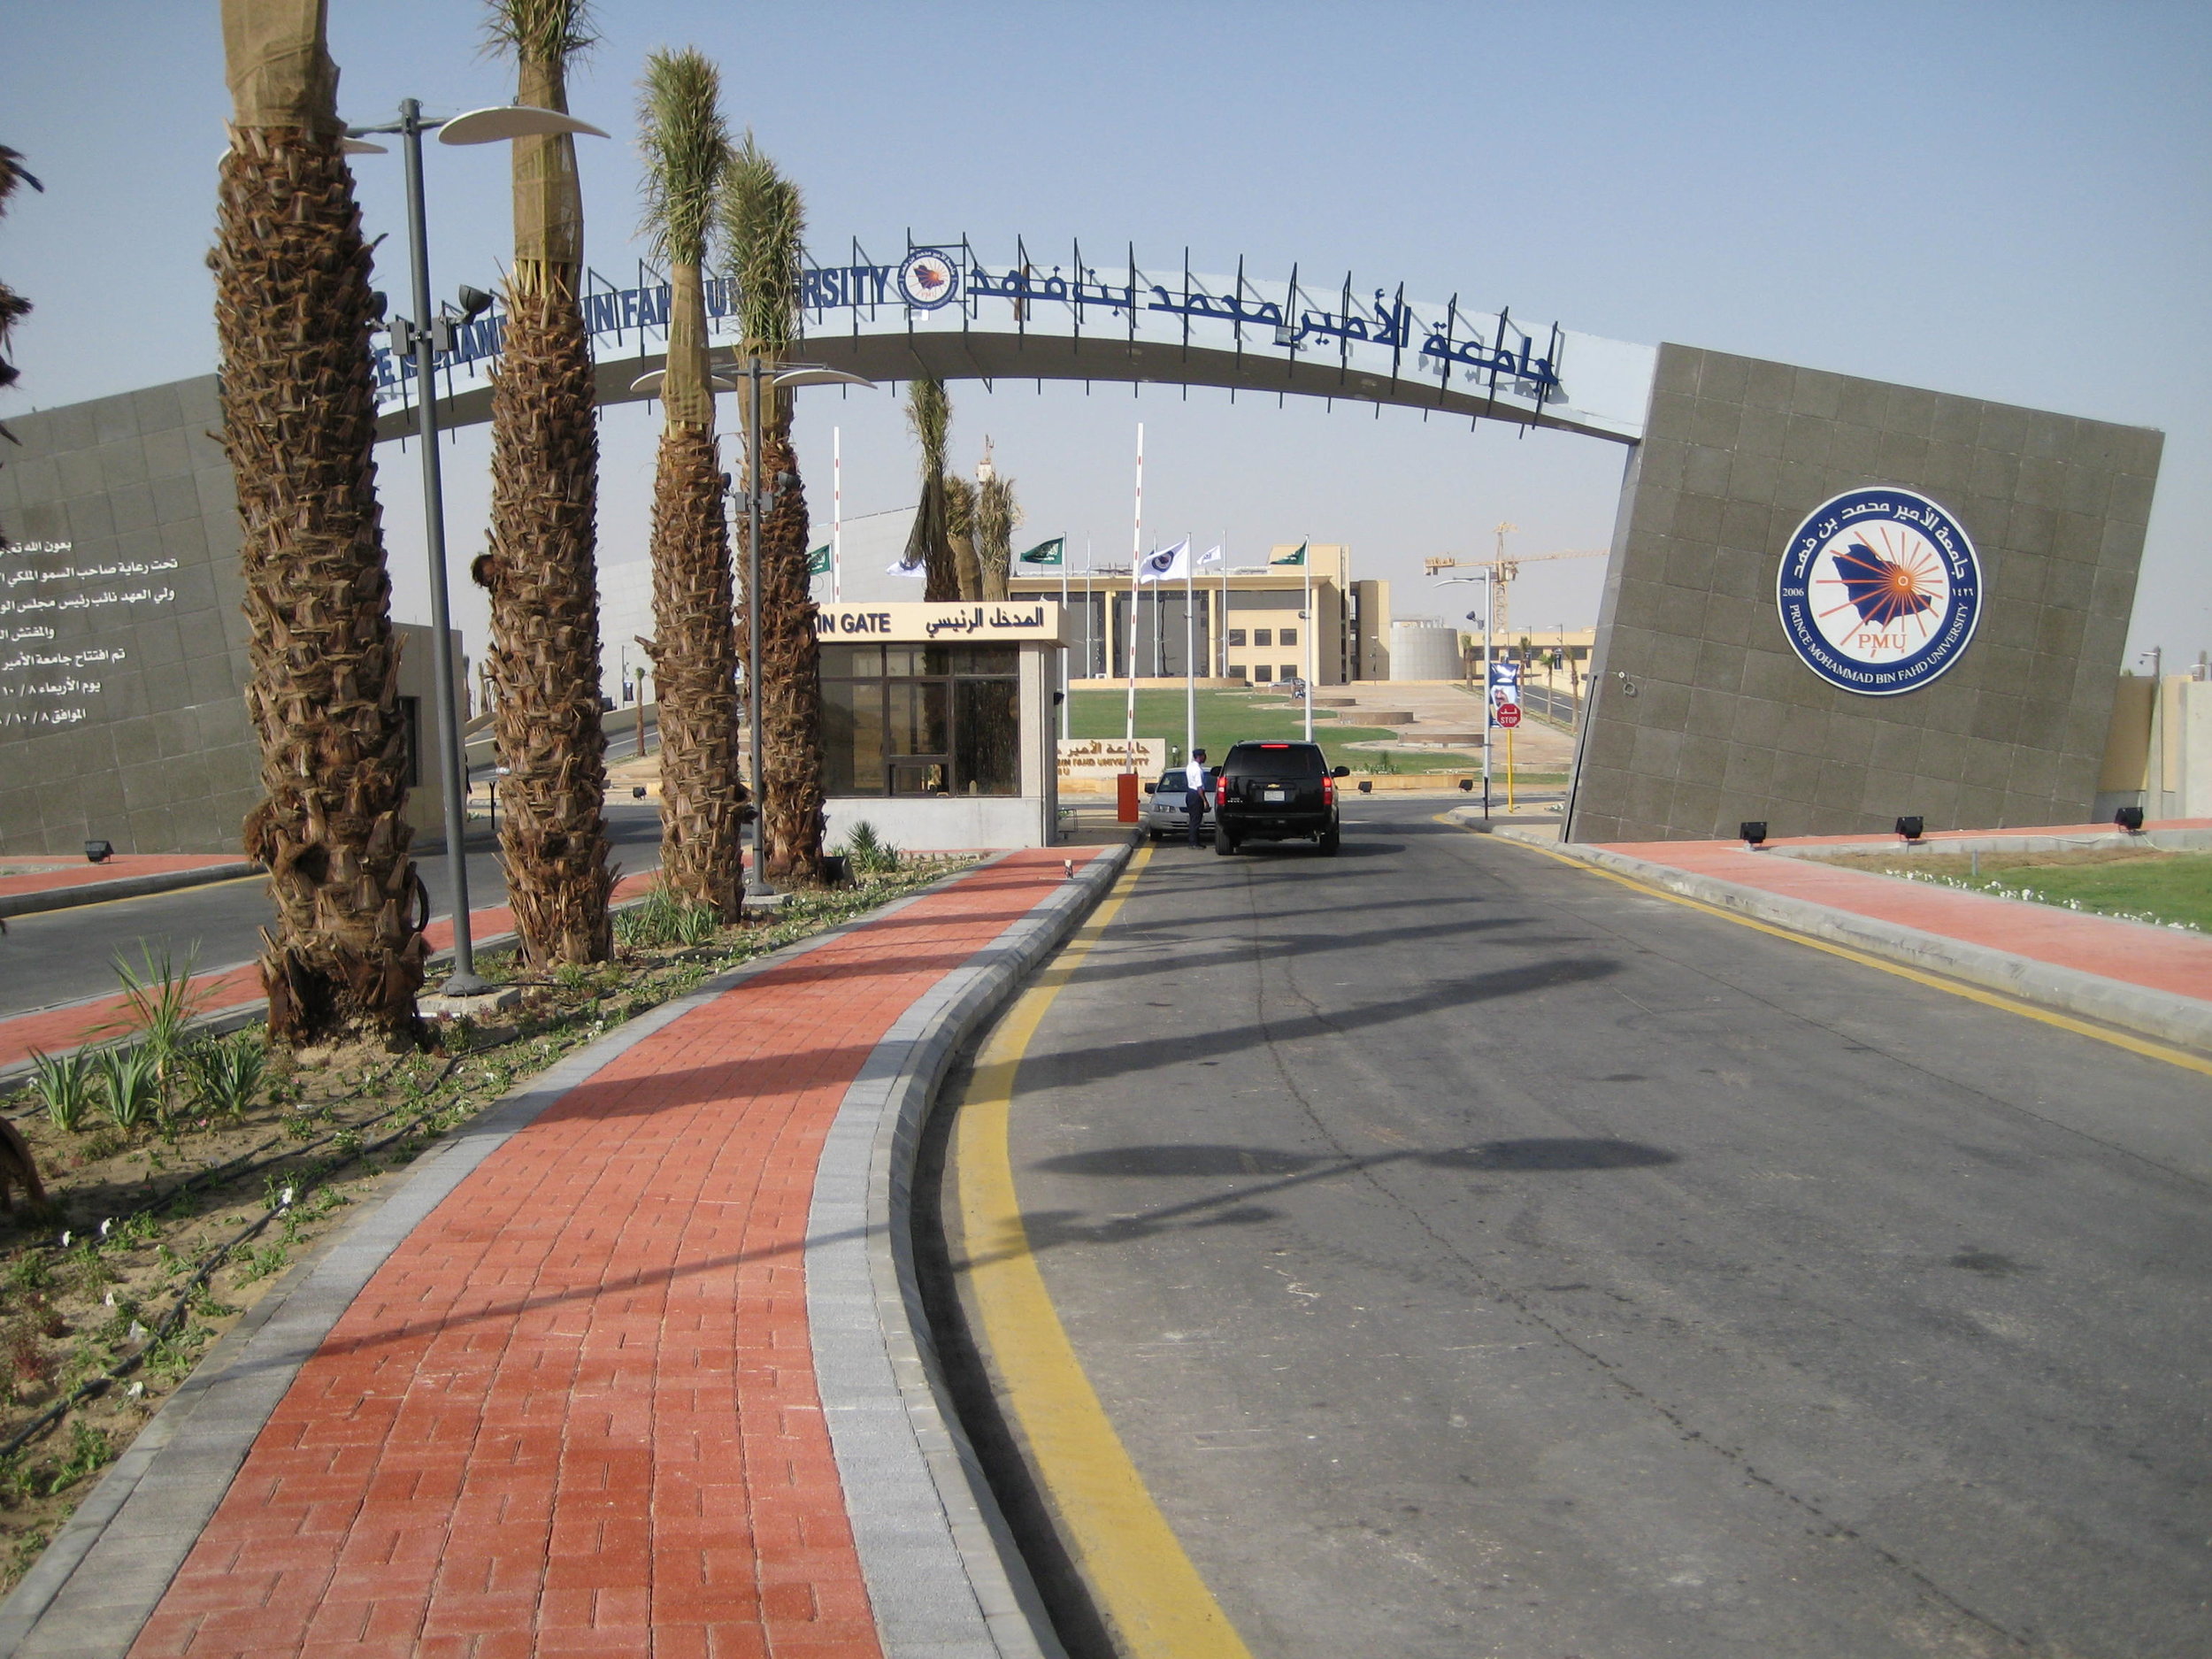 Photo of a university entrance gate in Saudi Arabia